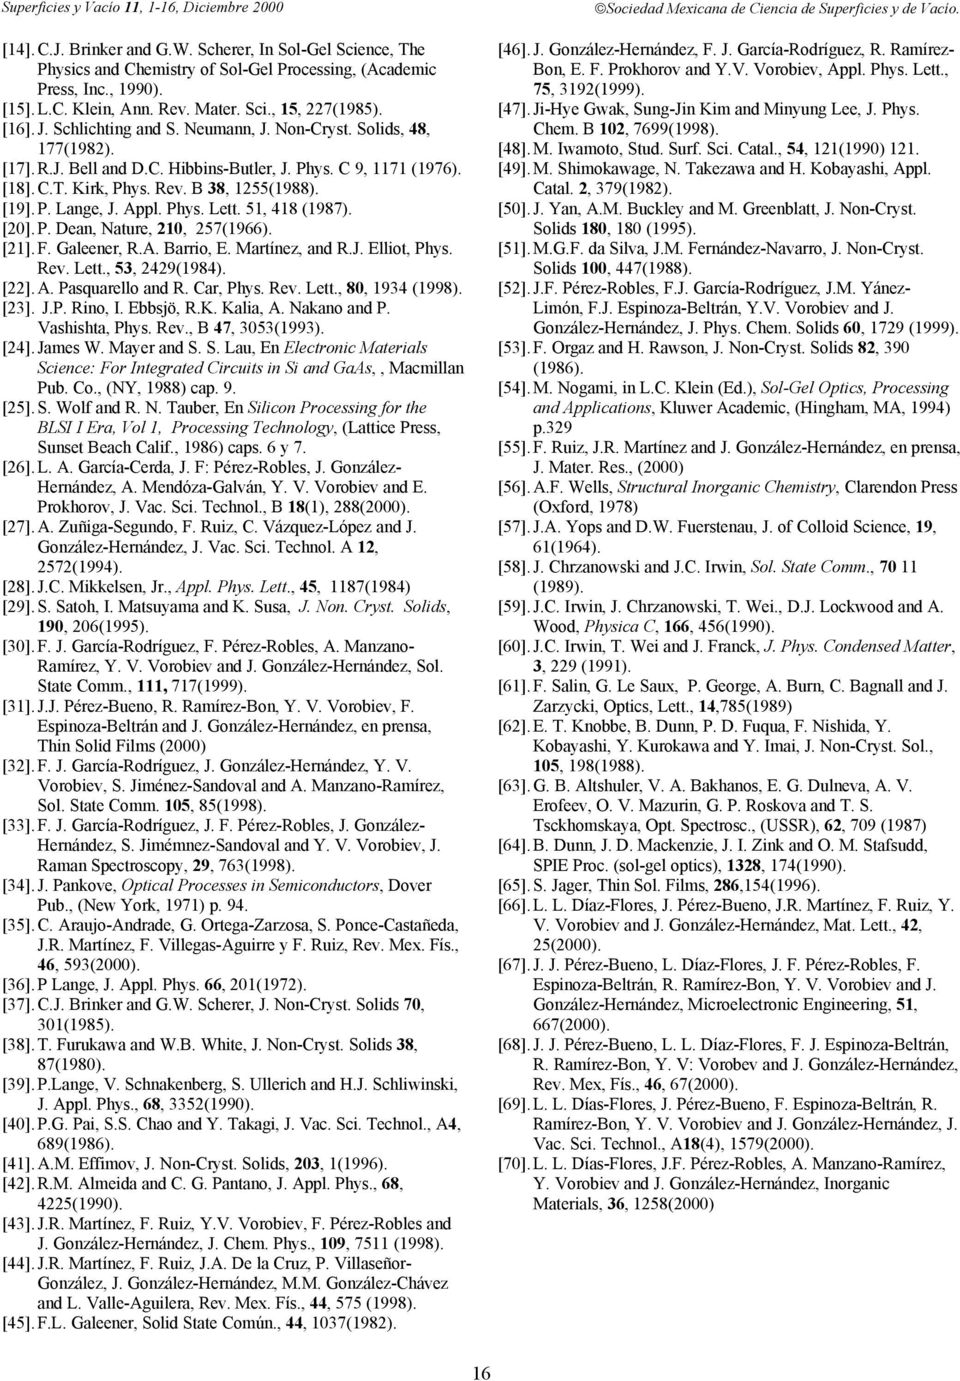 Appl. Phys. Lett. 51, 418 (1987). [20]. P. Dean, Nature, 210, 257(1966). [21]. F. Galeener, R.A. Barrio, E. Martínez, and R.J. Elliot, Phys. Rev. Lett., 53, 2429(1984). [22]. A. Pasquarello and R.